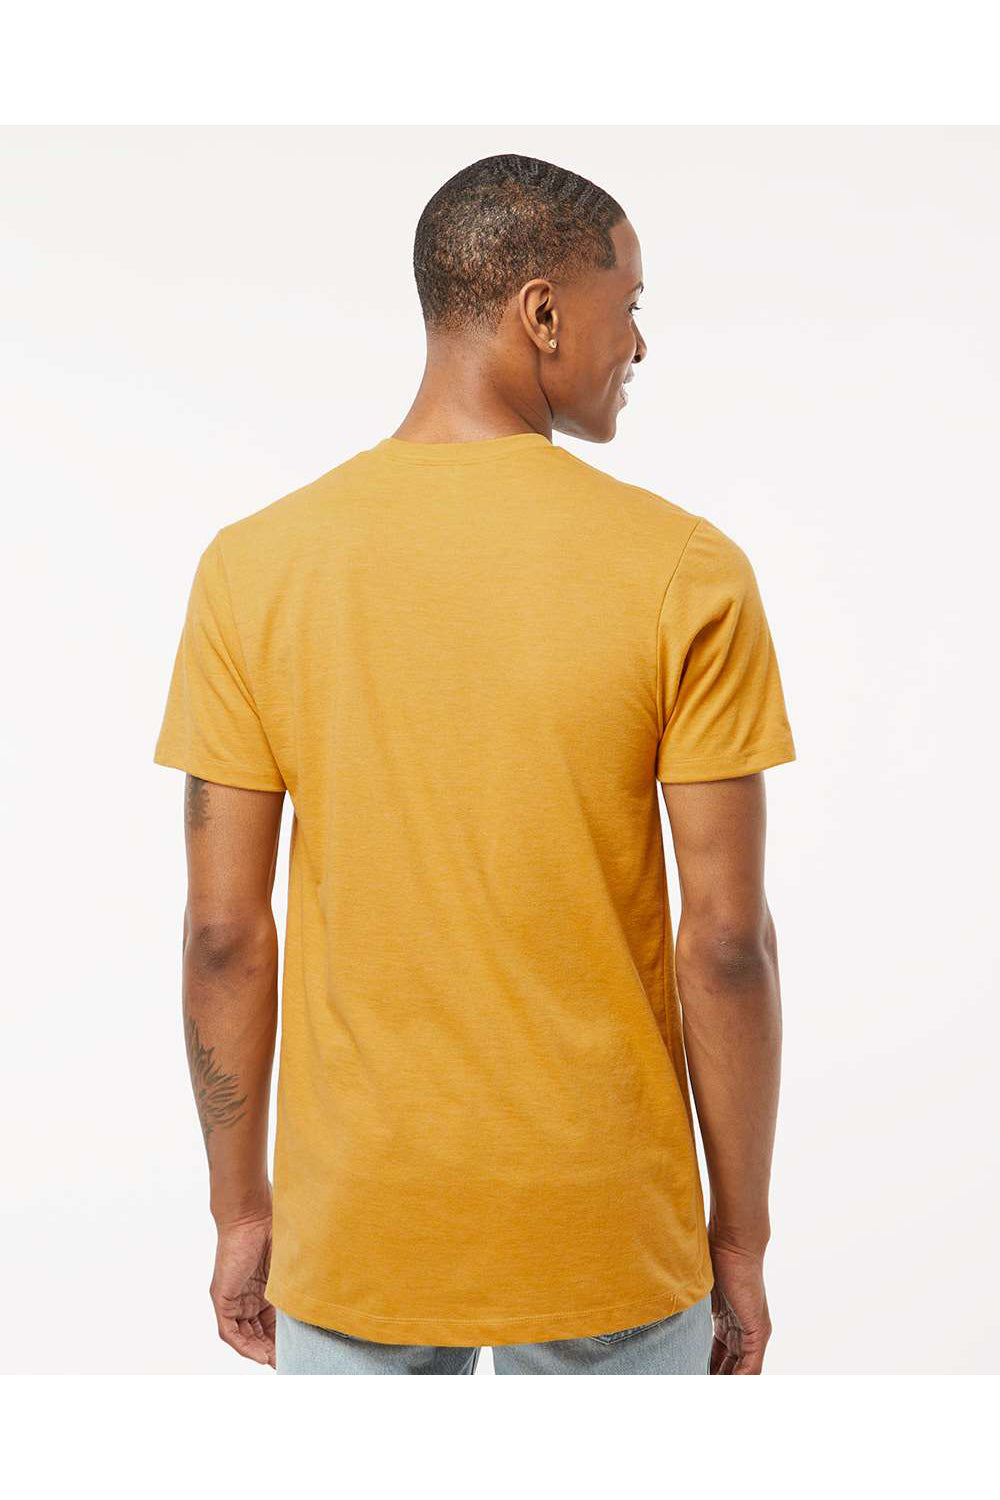 Tultex 541 Mens Premium Short Sleeve Crewneck T-Shirt Heather Antique Gold Model Back